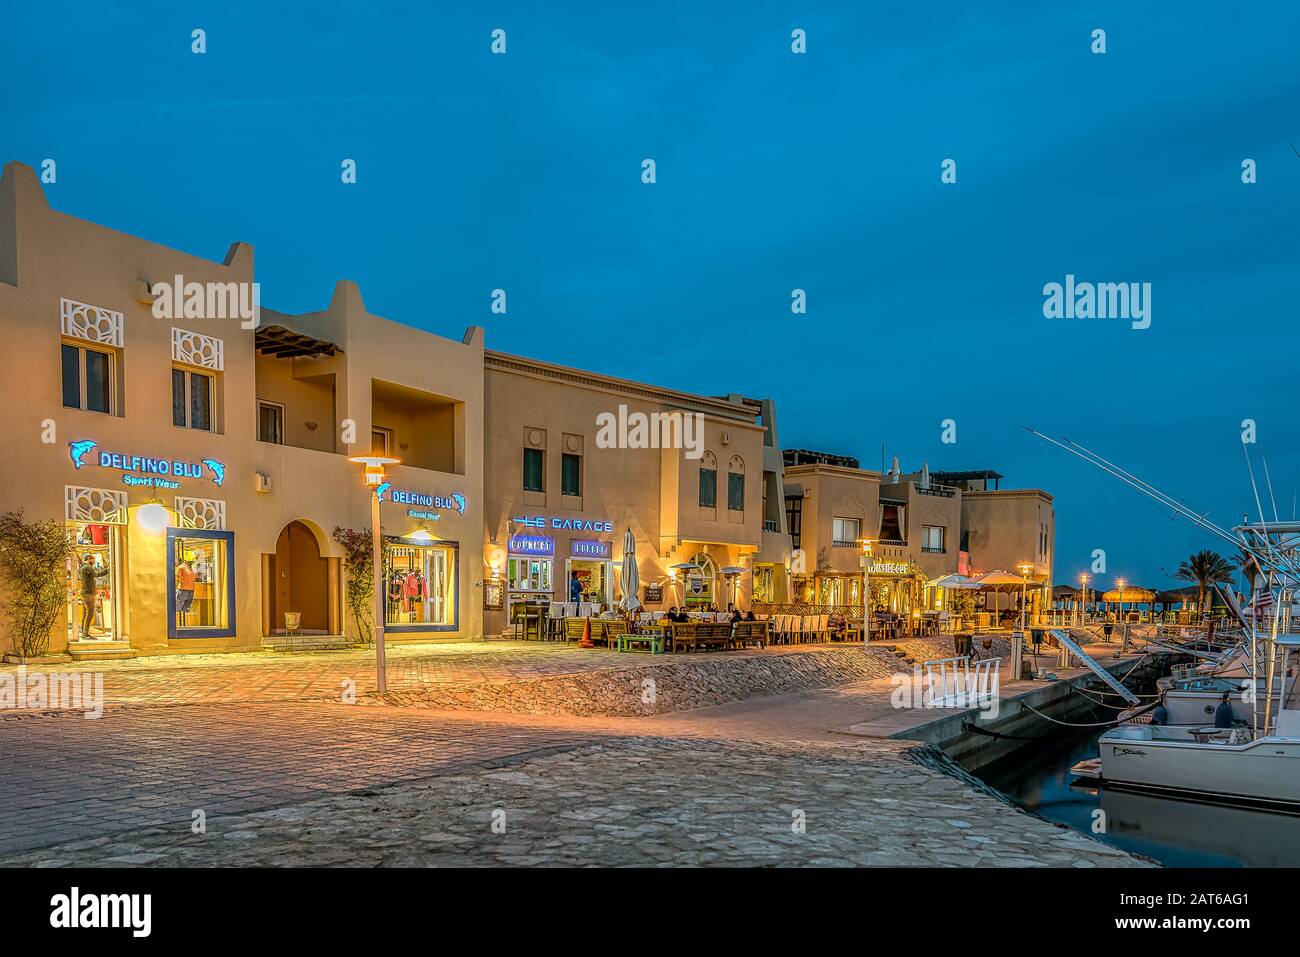 Beleuchtete Ladenfronten, die am Promade entlang des Yachthafens Abu tig in el Gouna, Ägypten, 14. Januar 2020 liegen Stockfoto